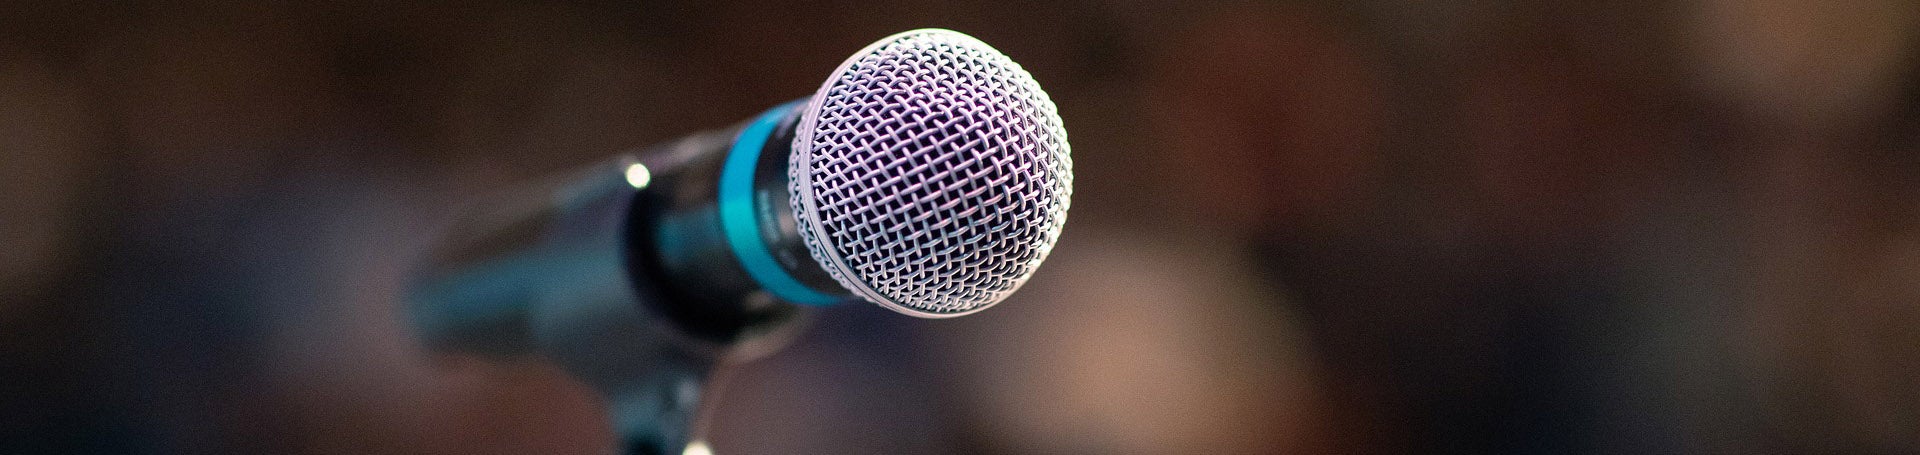 Microphone close-up, source: pixabay.com